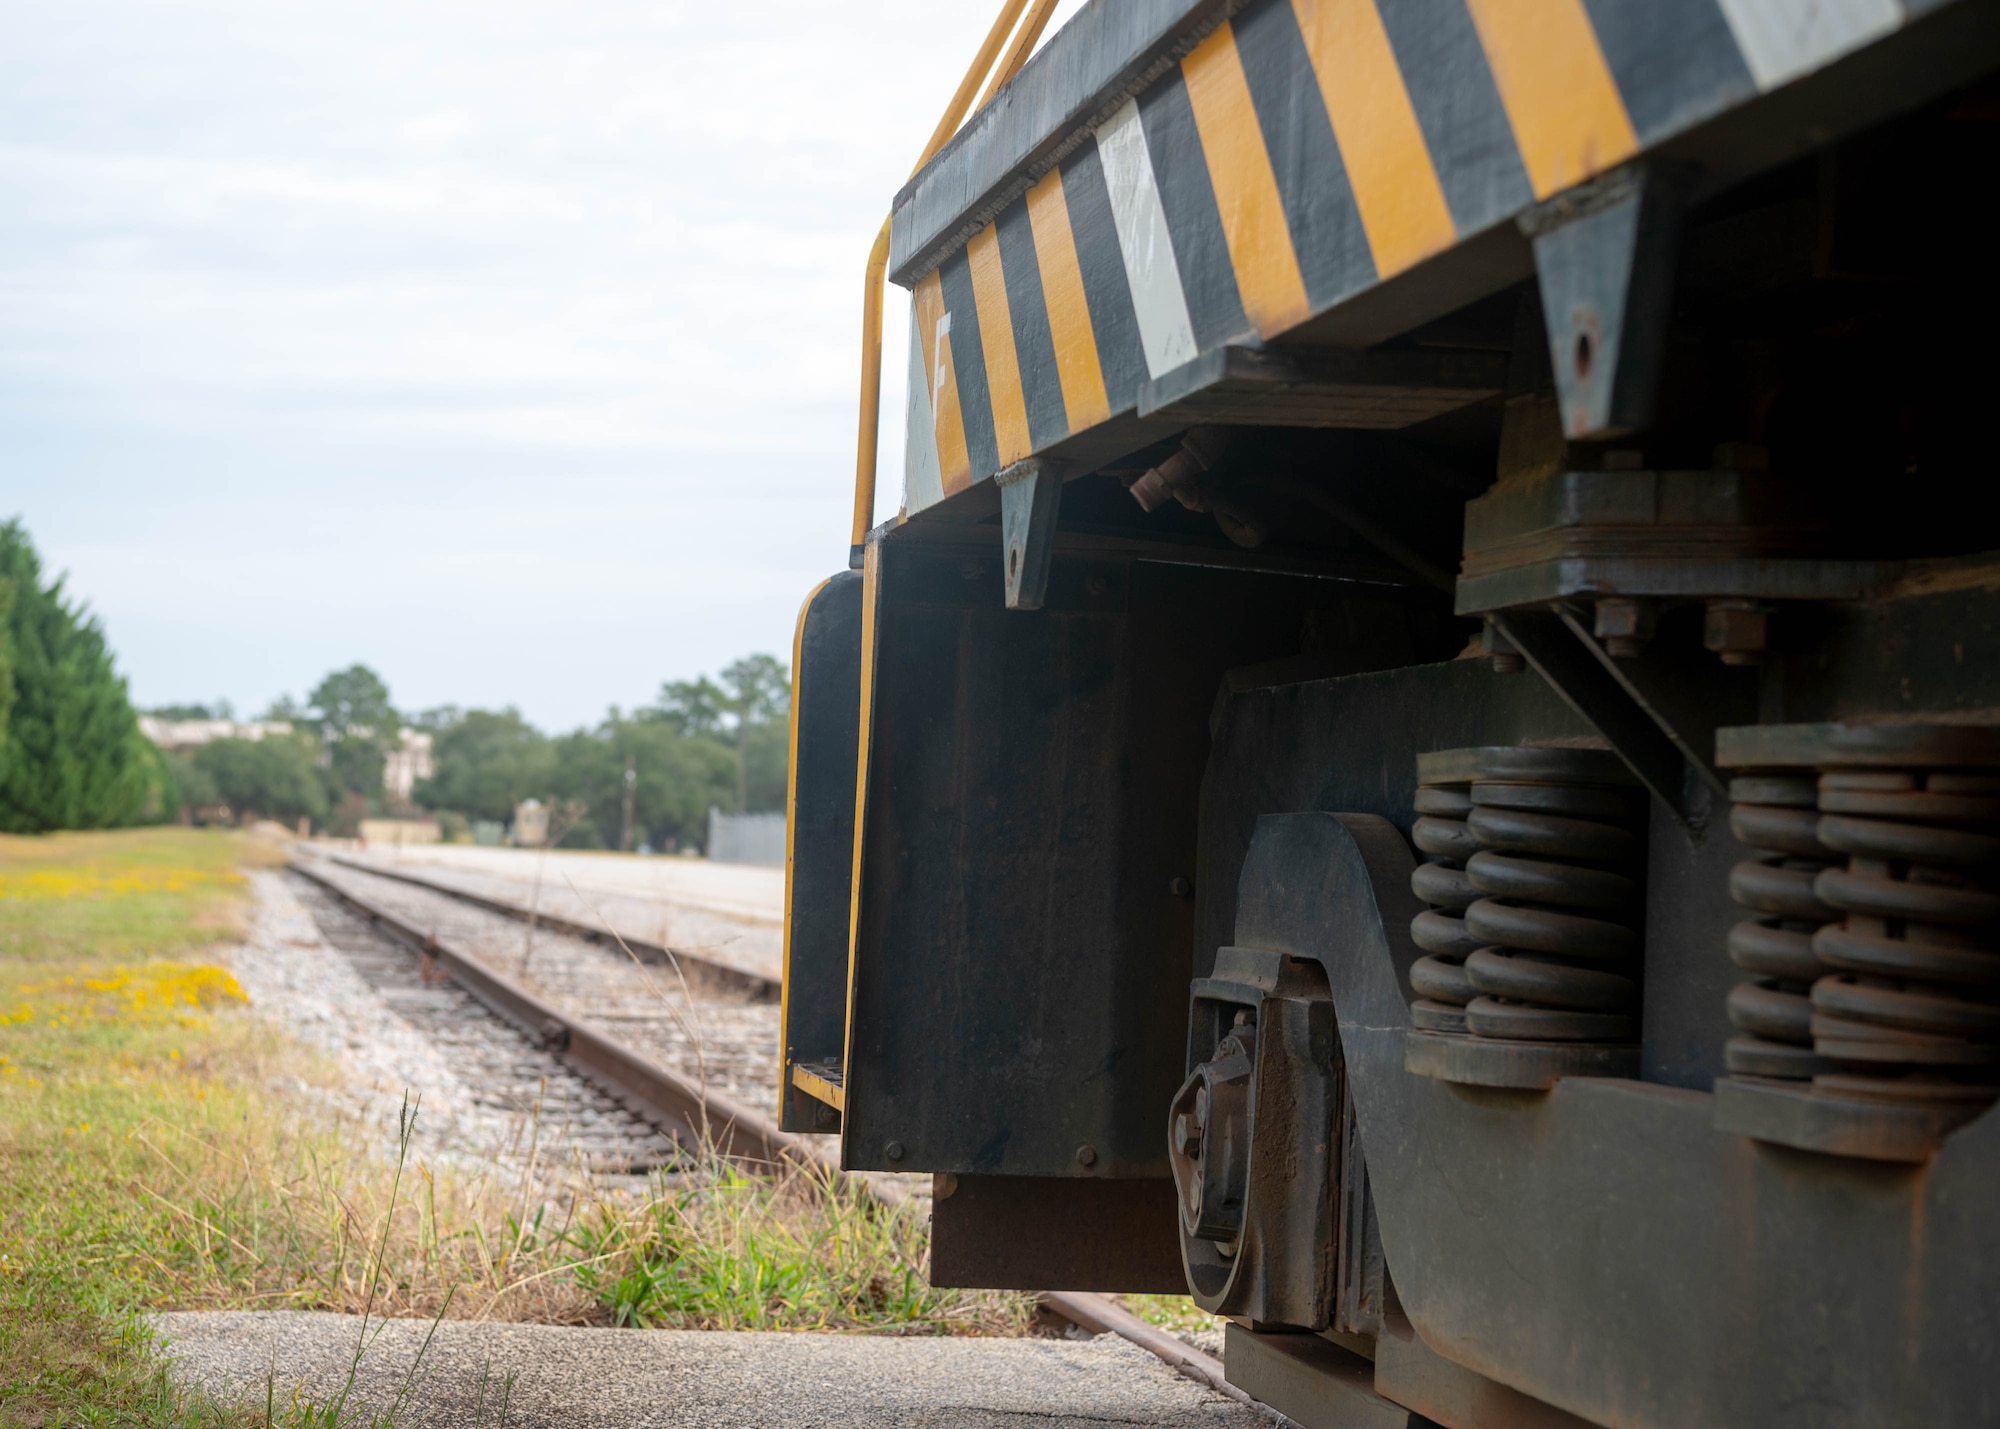 Close up image of train and railroad tracks.